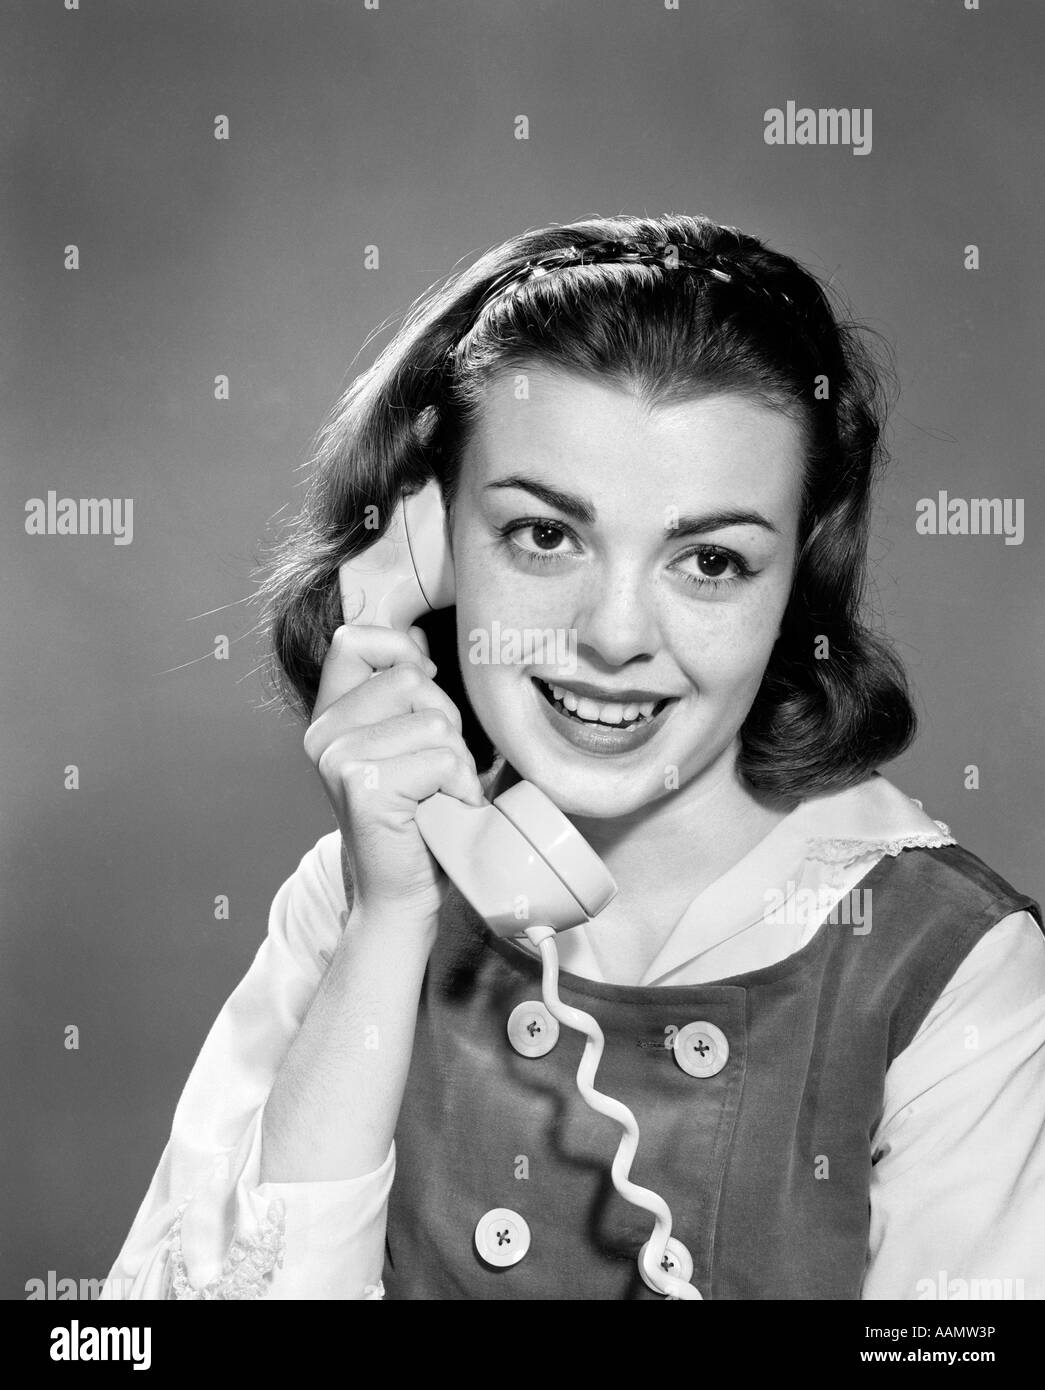 1950S 1960S JUNGE FRAU AM TELEFON Stockfoto